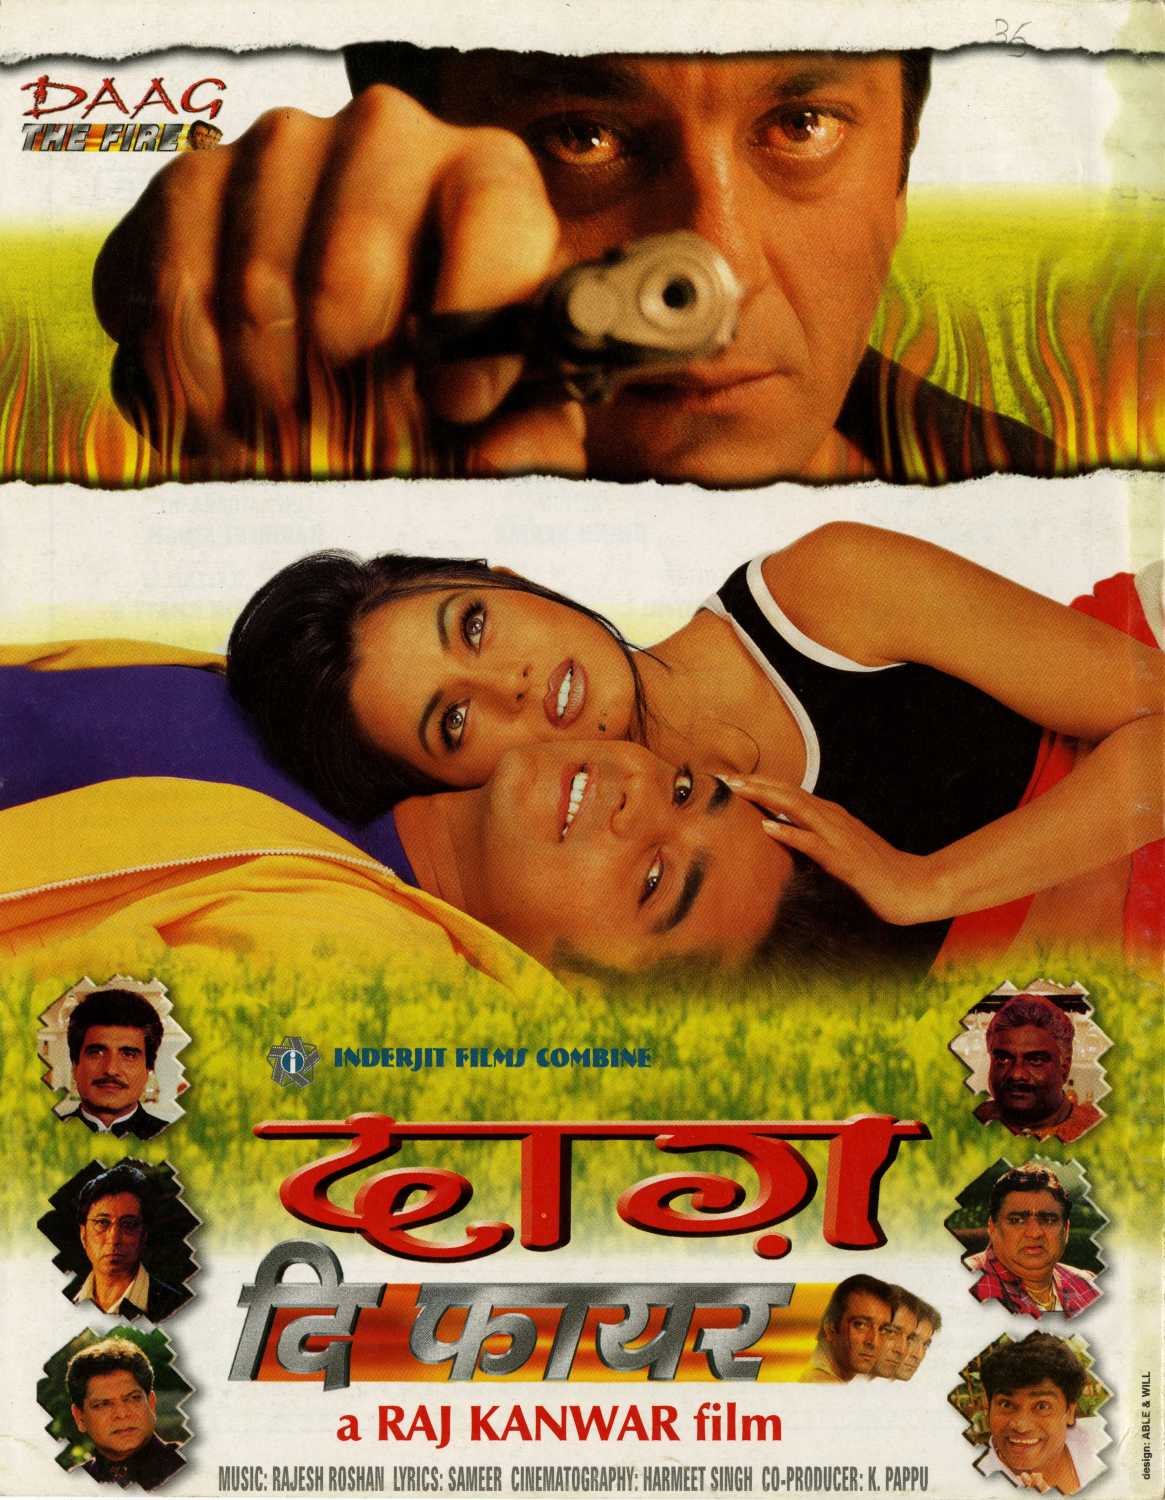 Daag rajesh khanna full hindi movie download